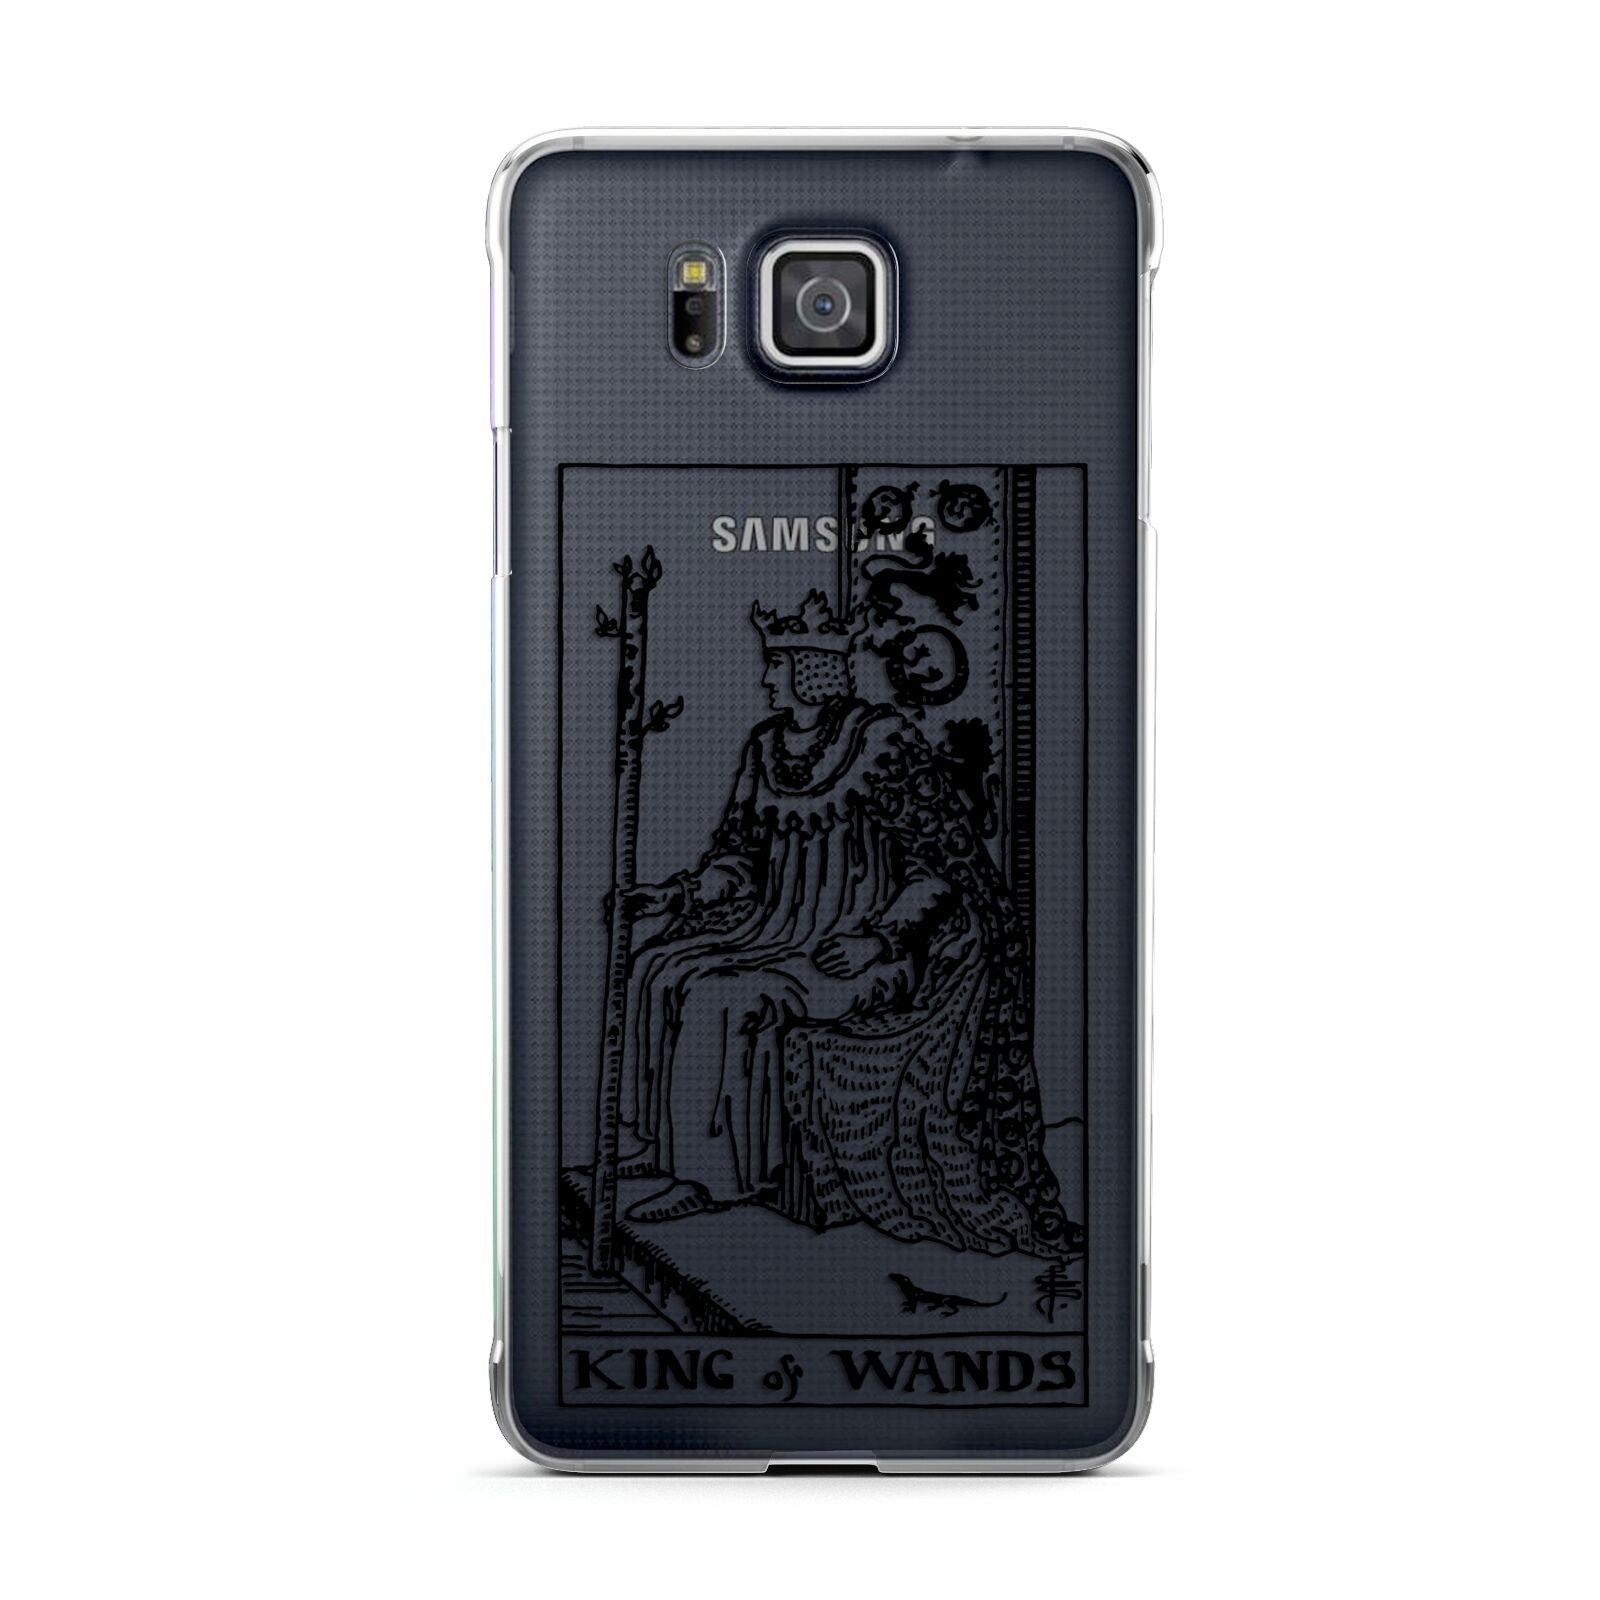 King of Wands Monochrome Samsung Galaxy Alpha Case